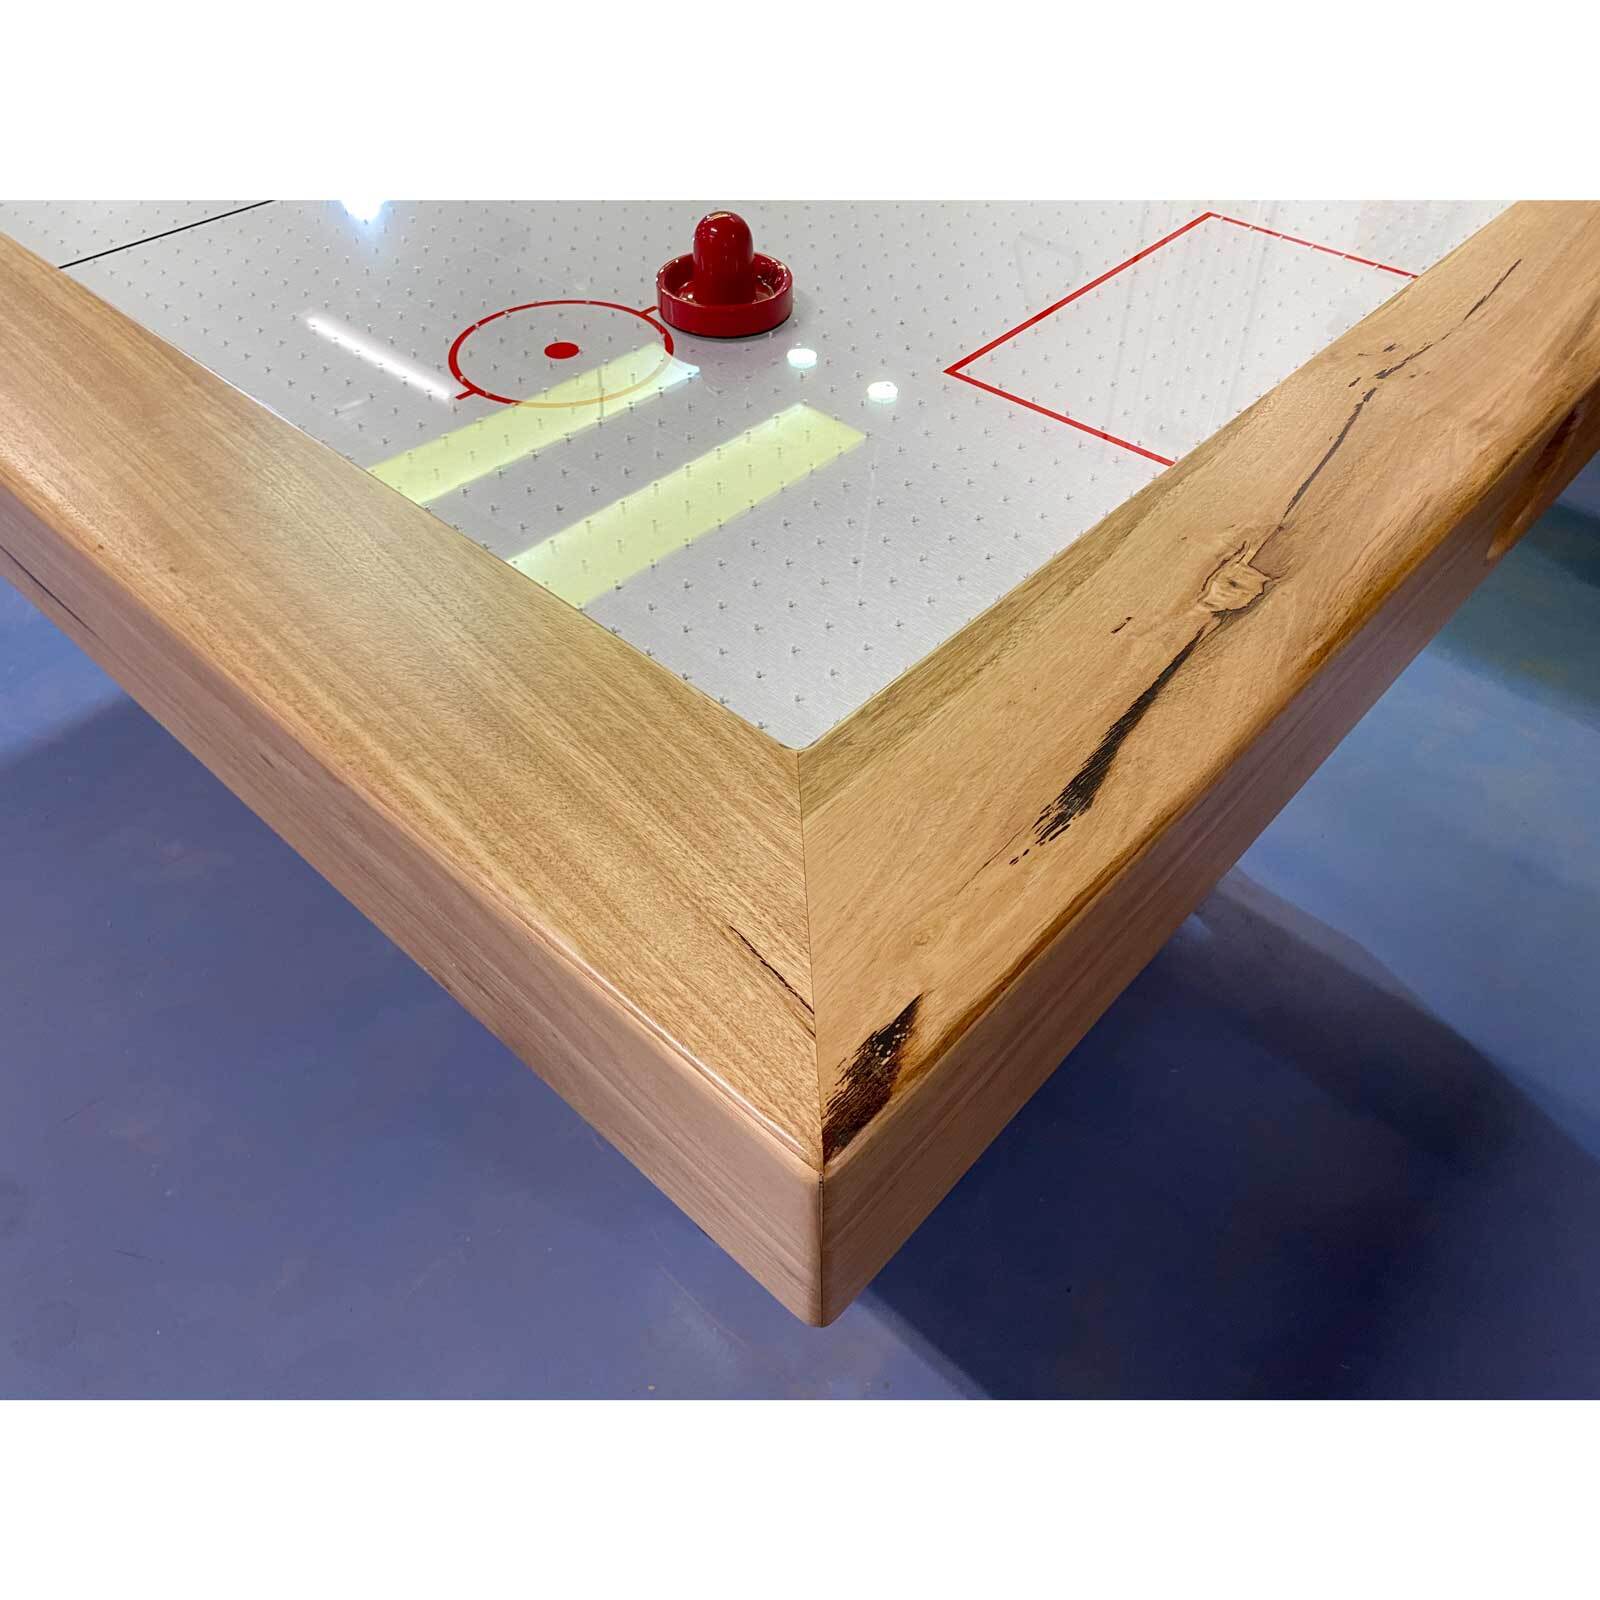 8ft Auto-Rise regent Air Hockey Table - PVC base (no LED installed)